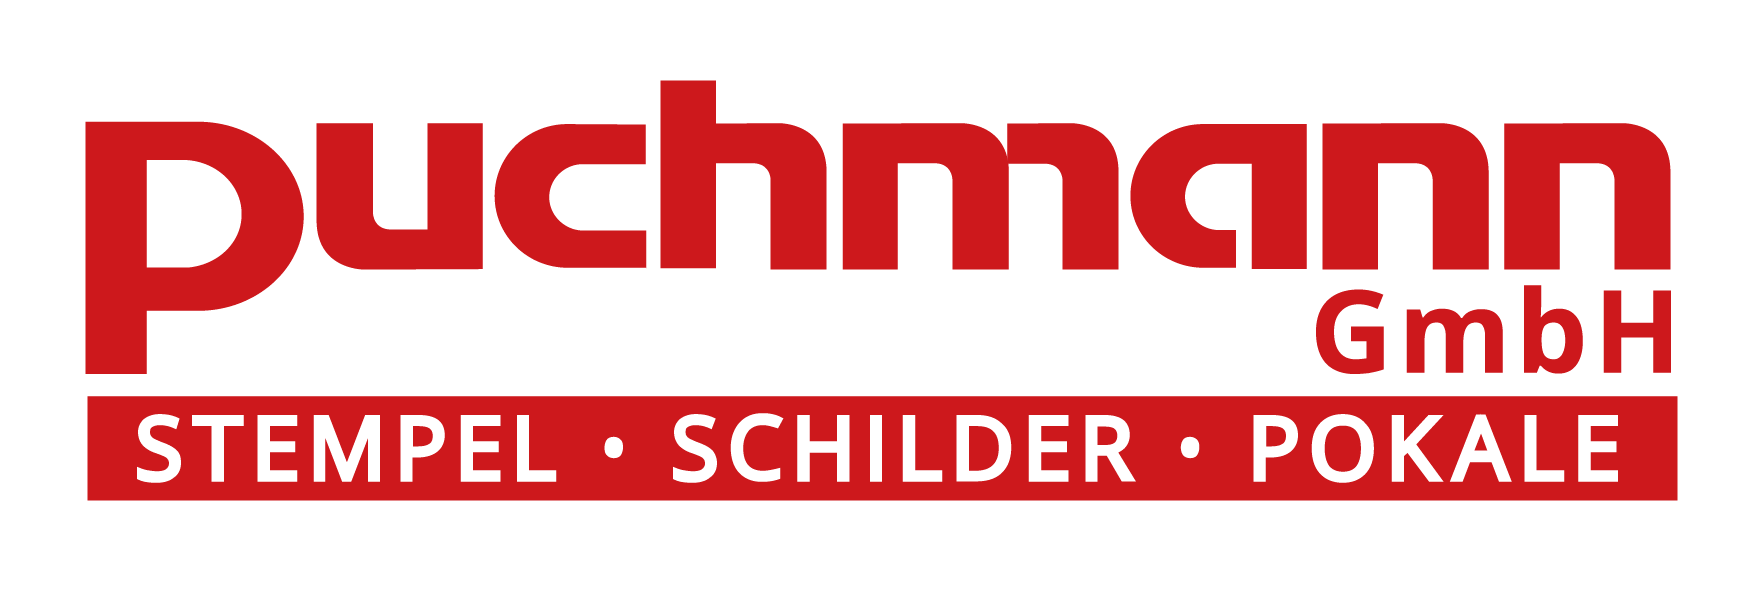 Puchmann-Logo